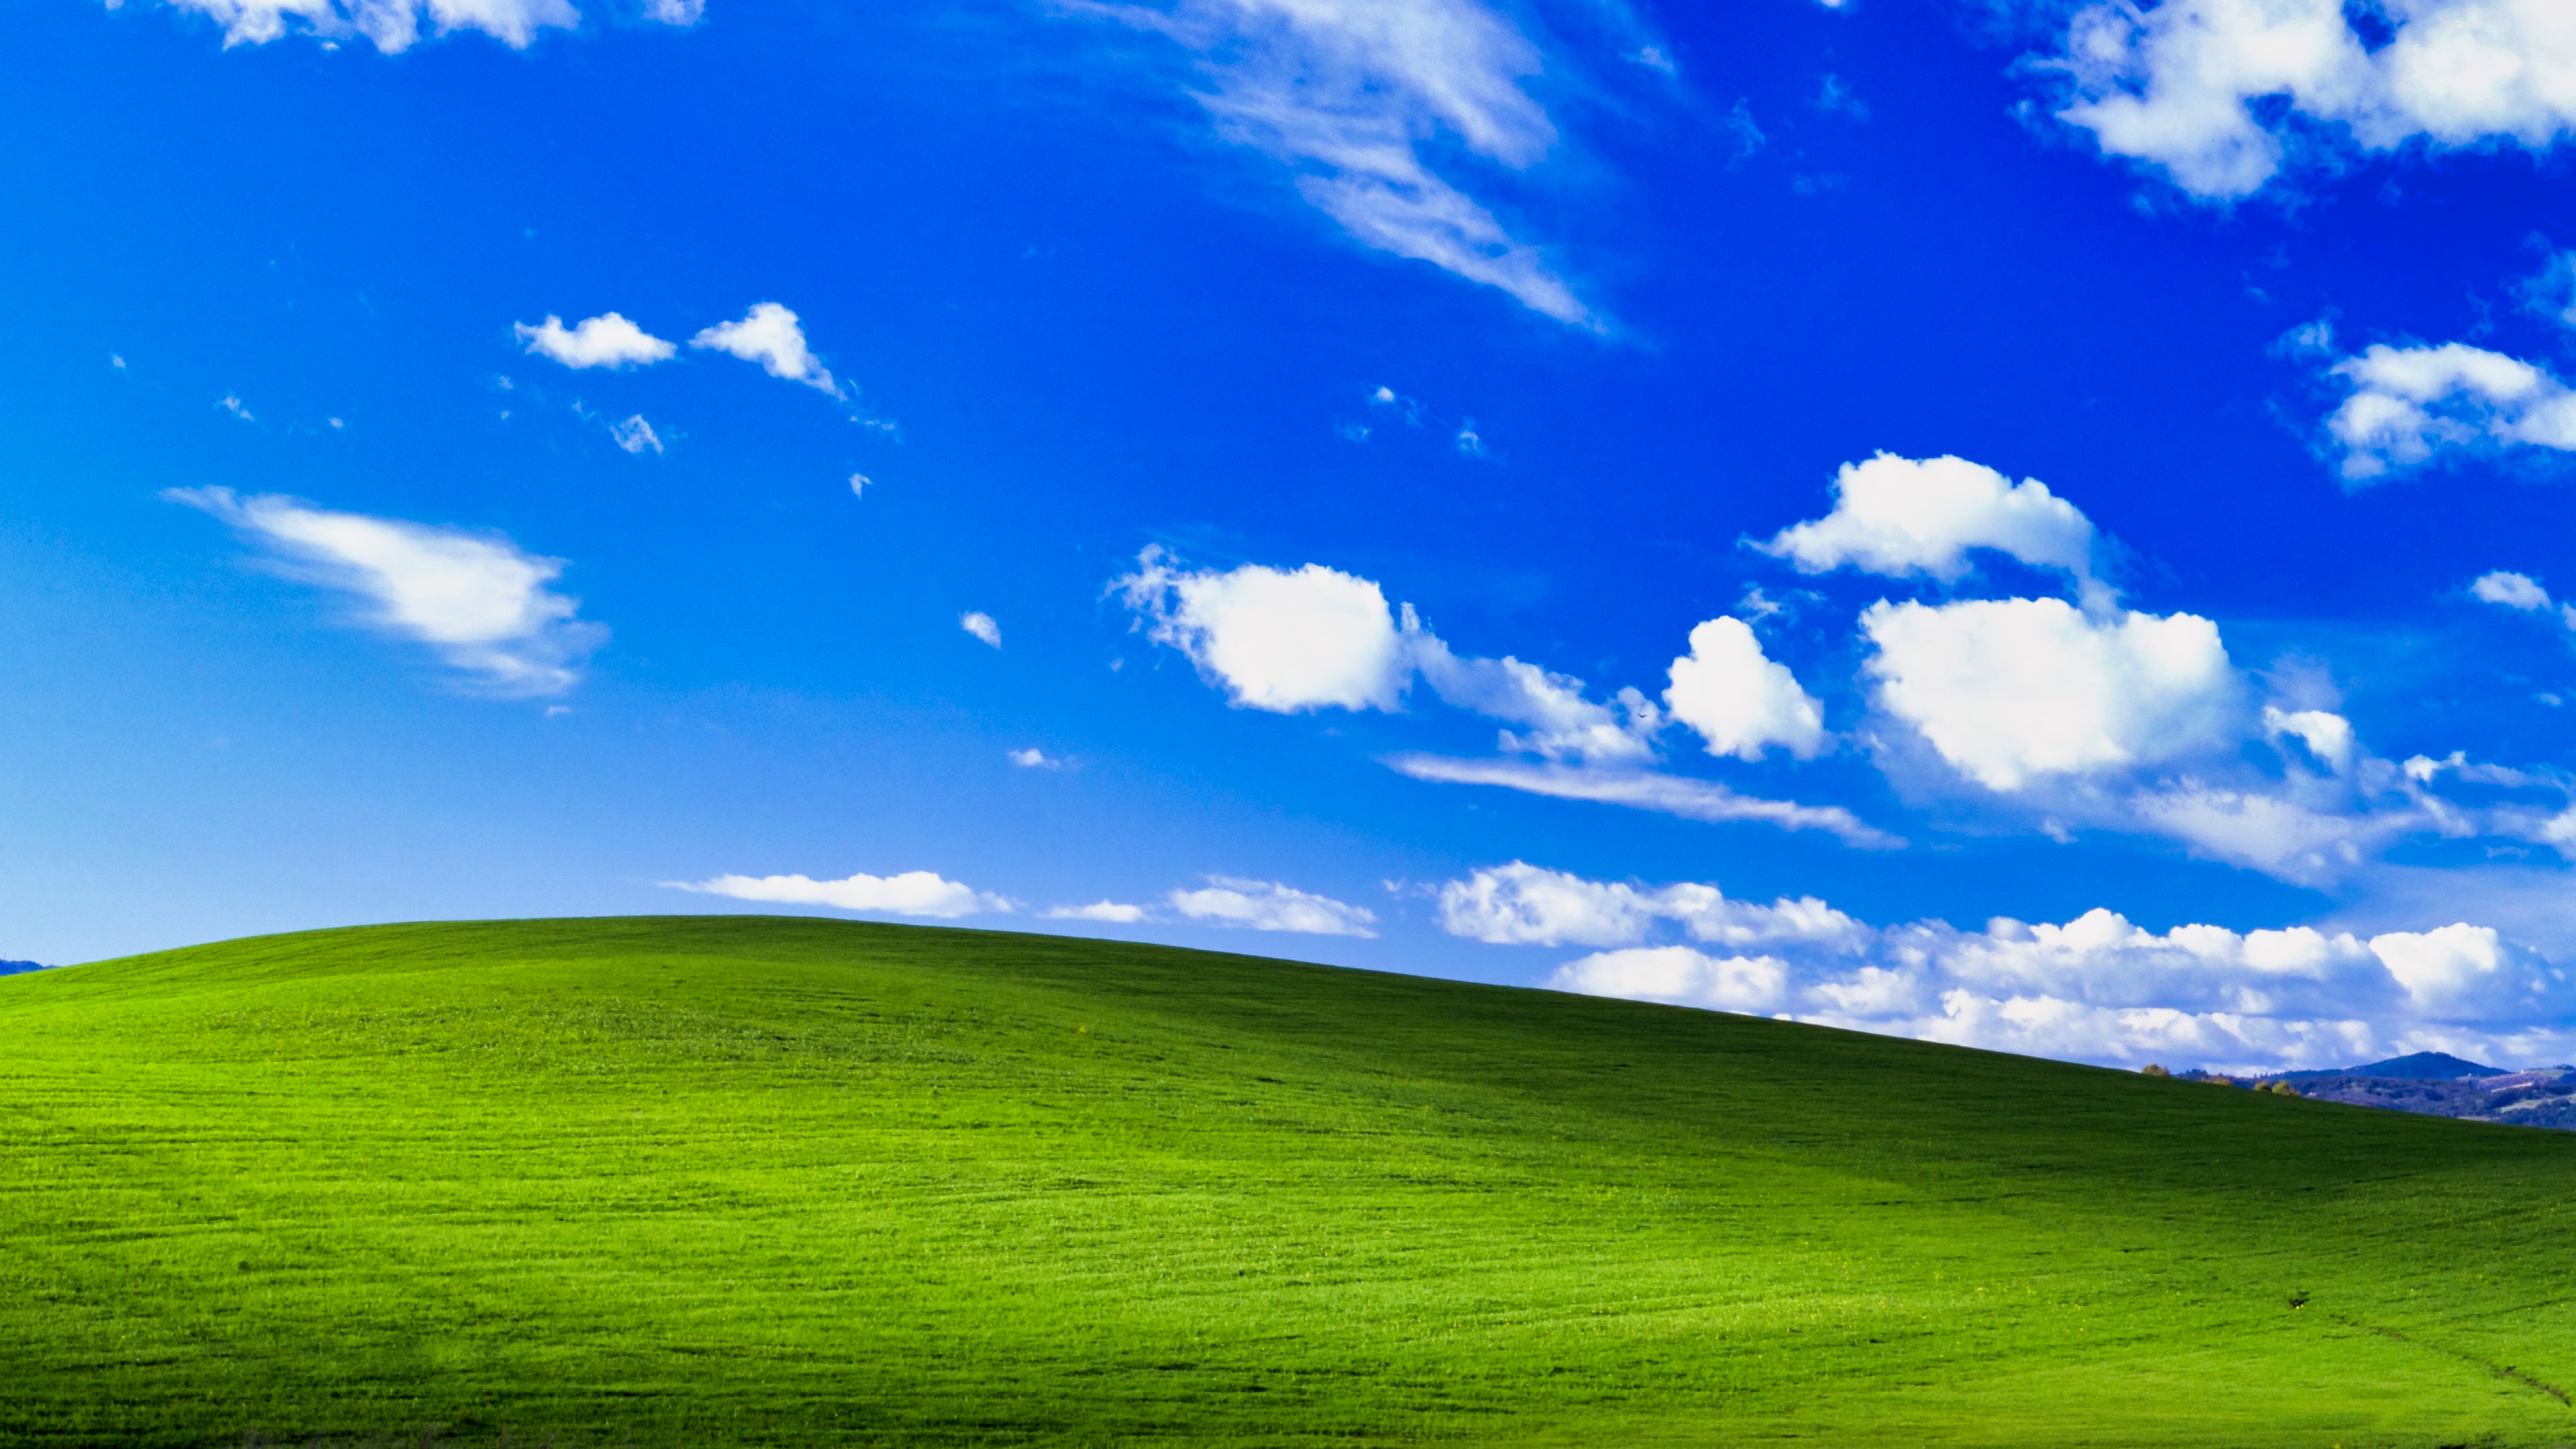 Windows Xp Wallpaper - Windows Xp Background 4k - 3840x2160 Wallpaper ...